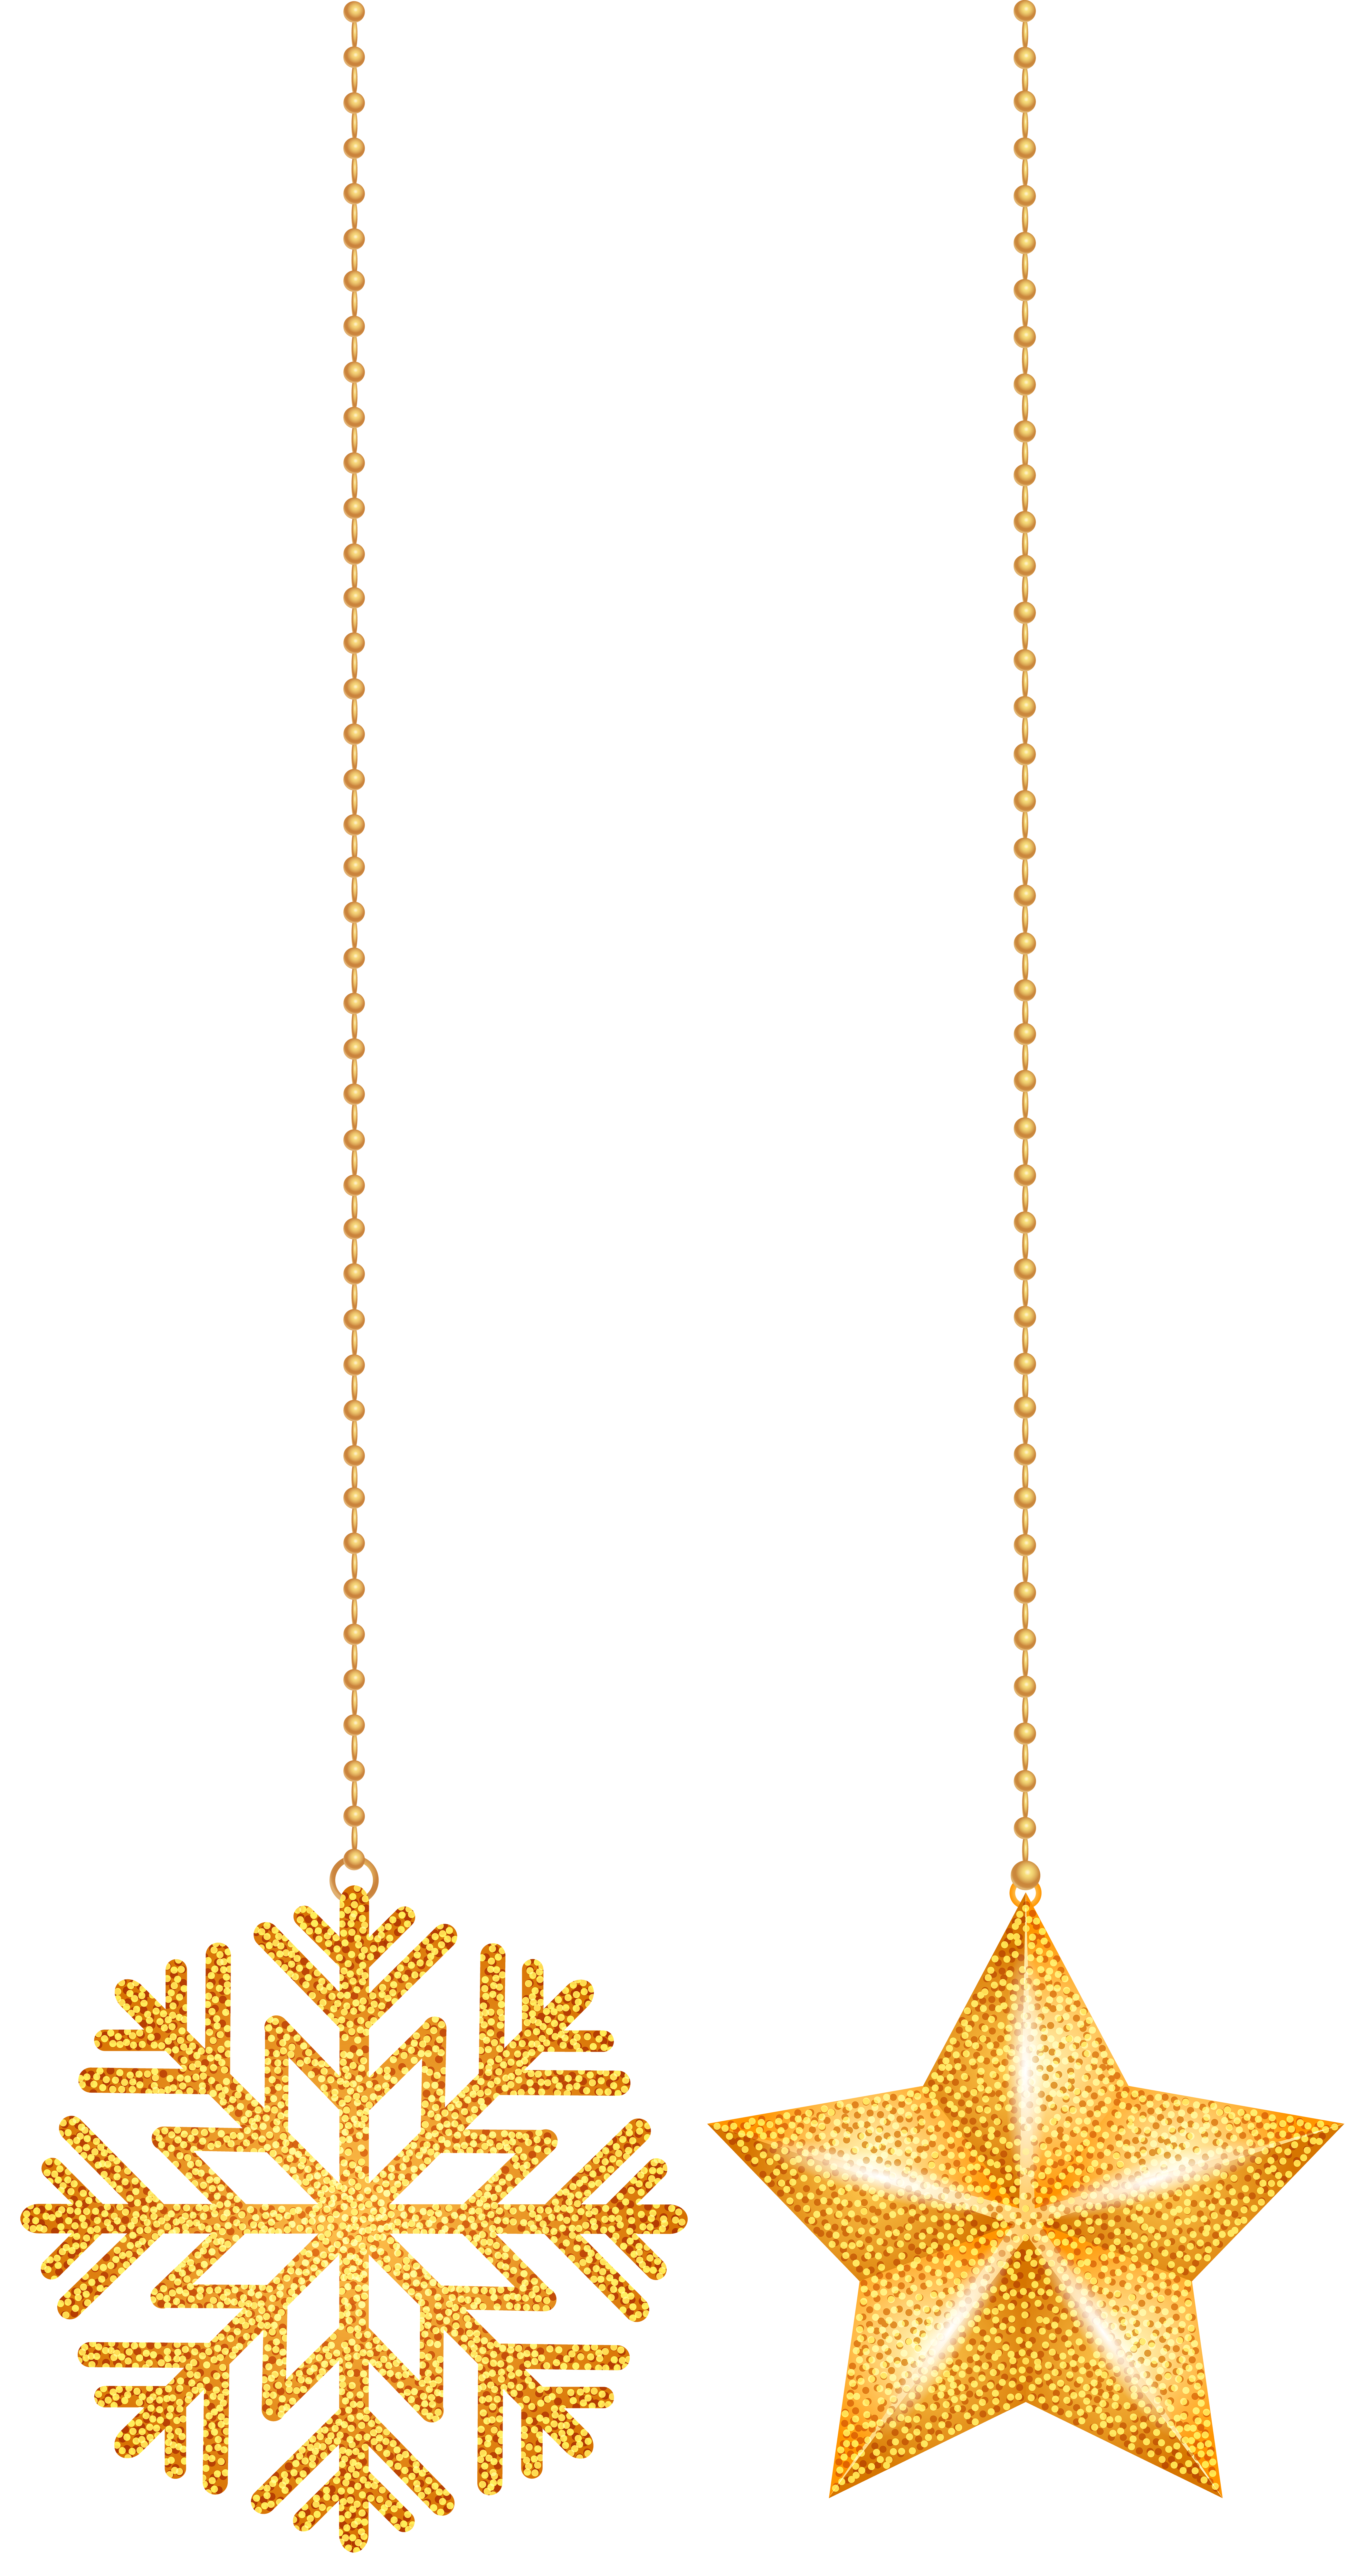 ornament clipart necklace